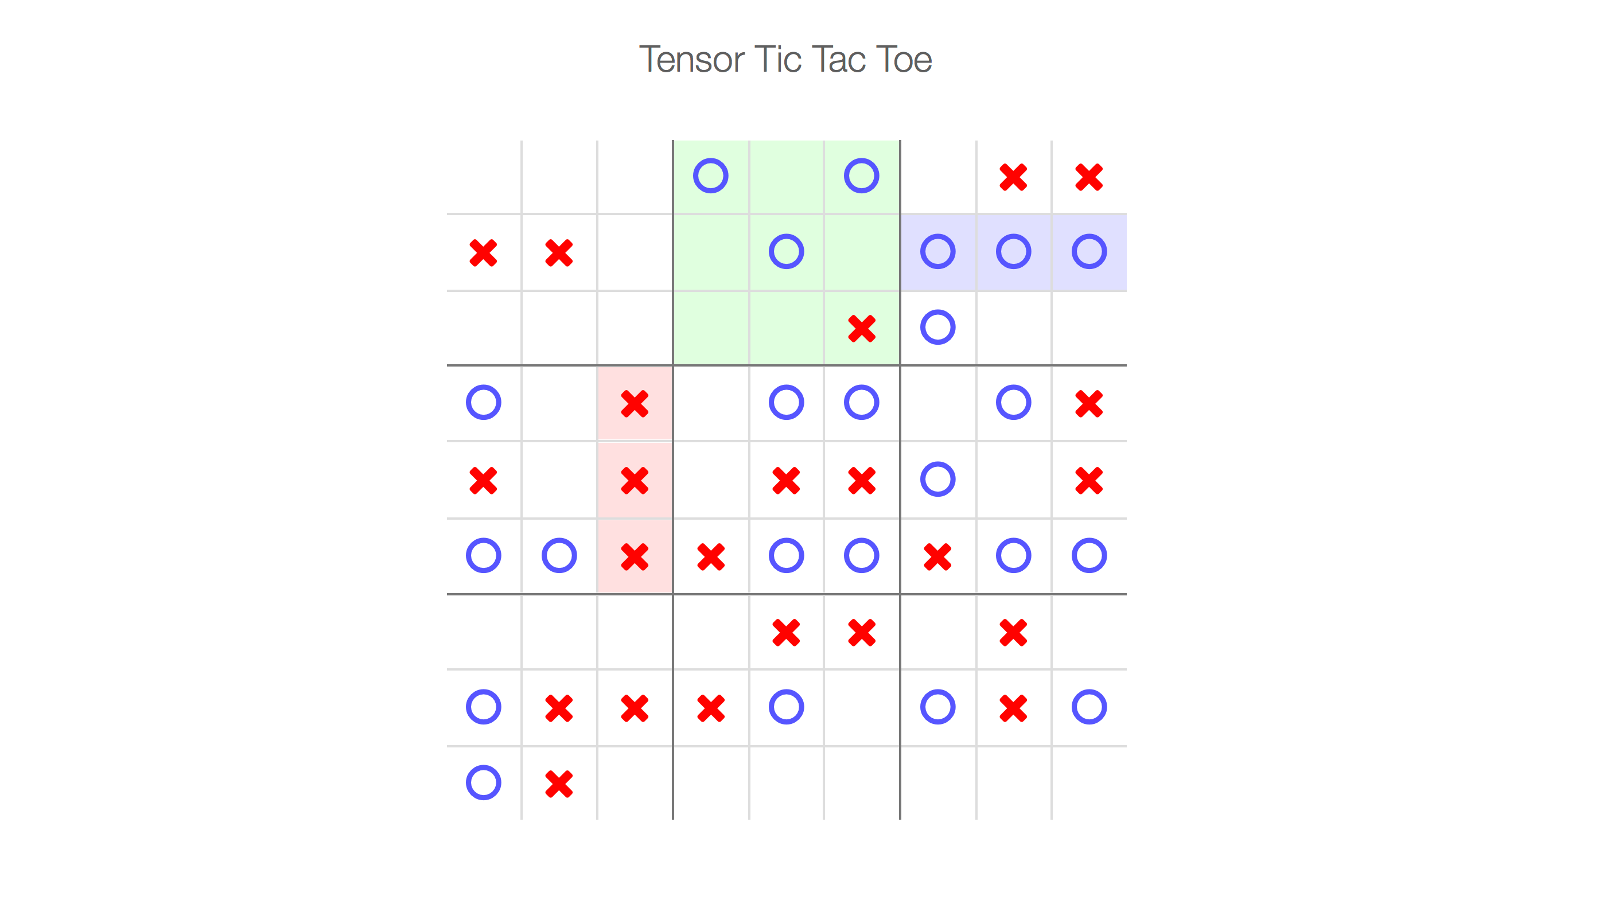 A screenshot of the Tensor Tic Tac Toe game.